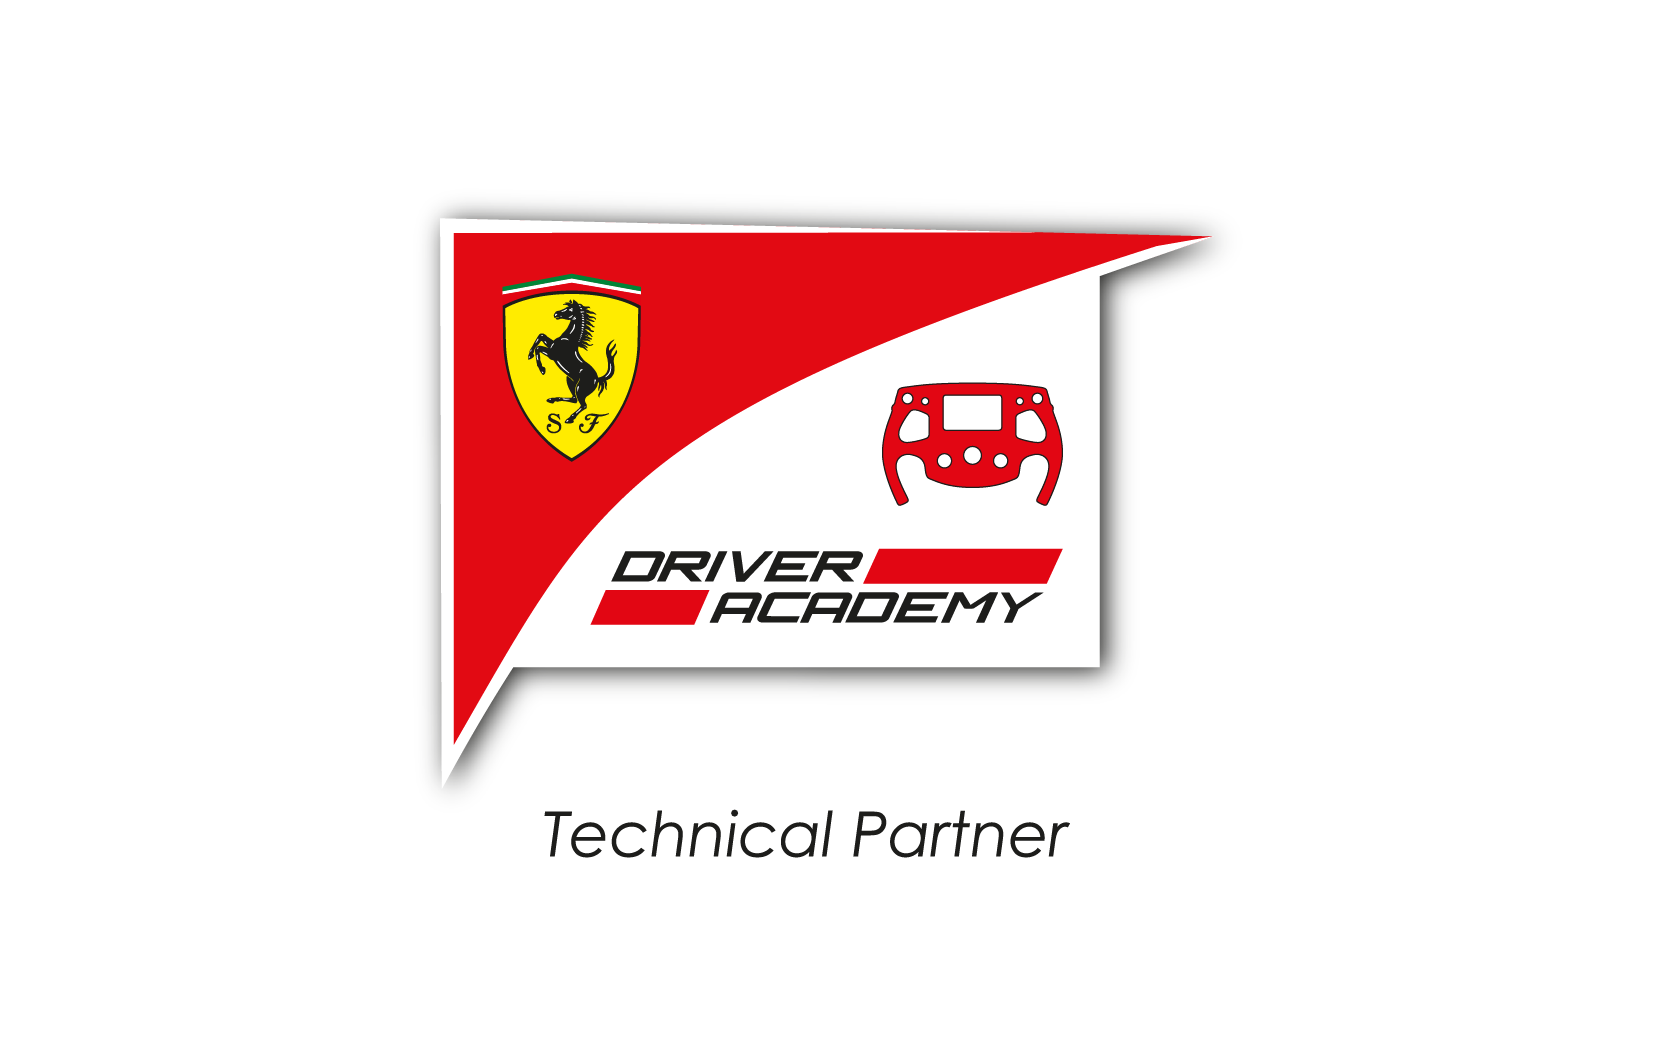 Ferrari driver Academy